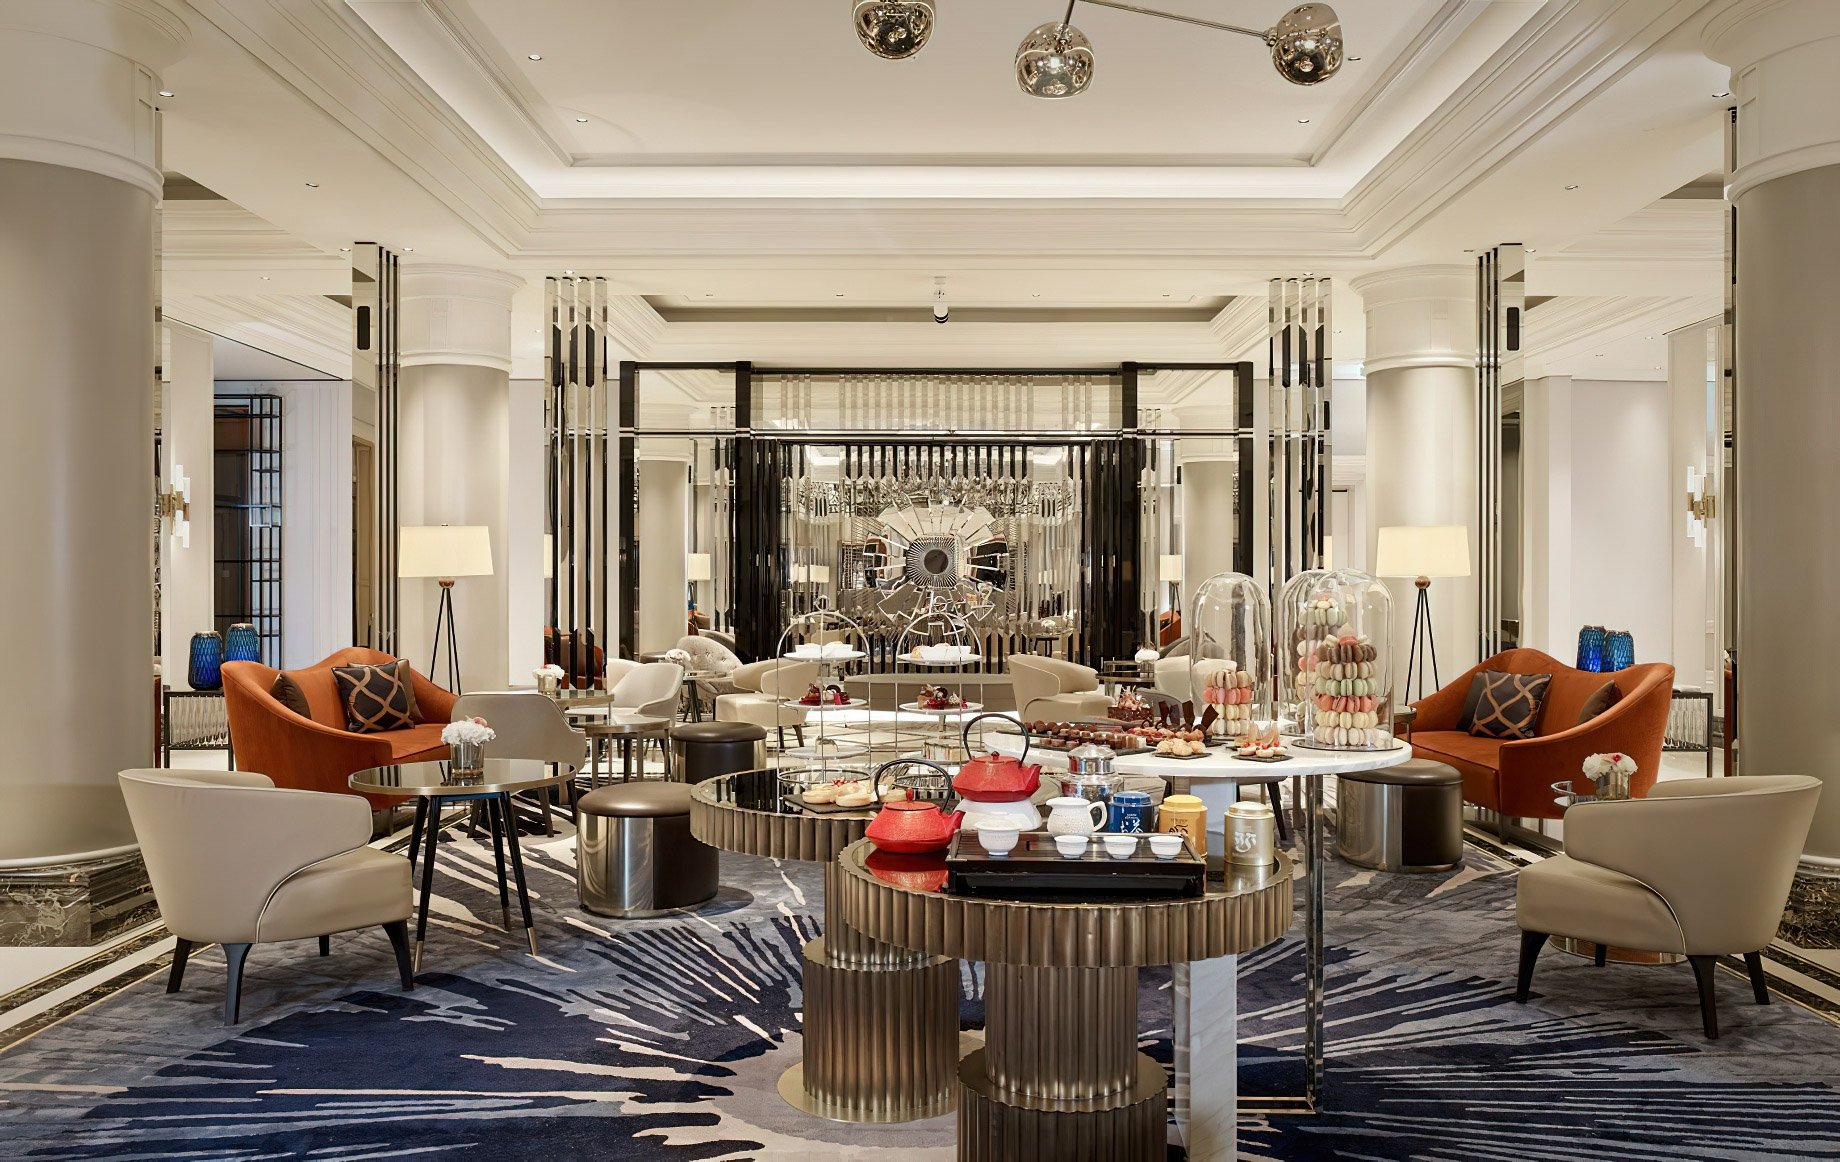 The Ritz-Carlton, Berlin Hotel – Berlin, Germany – The Lounge Interior